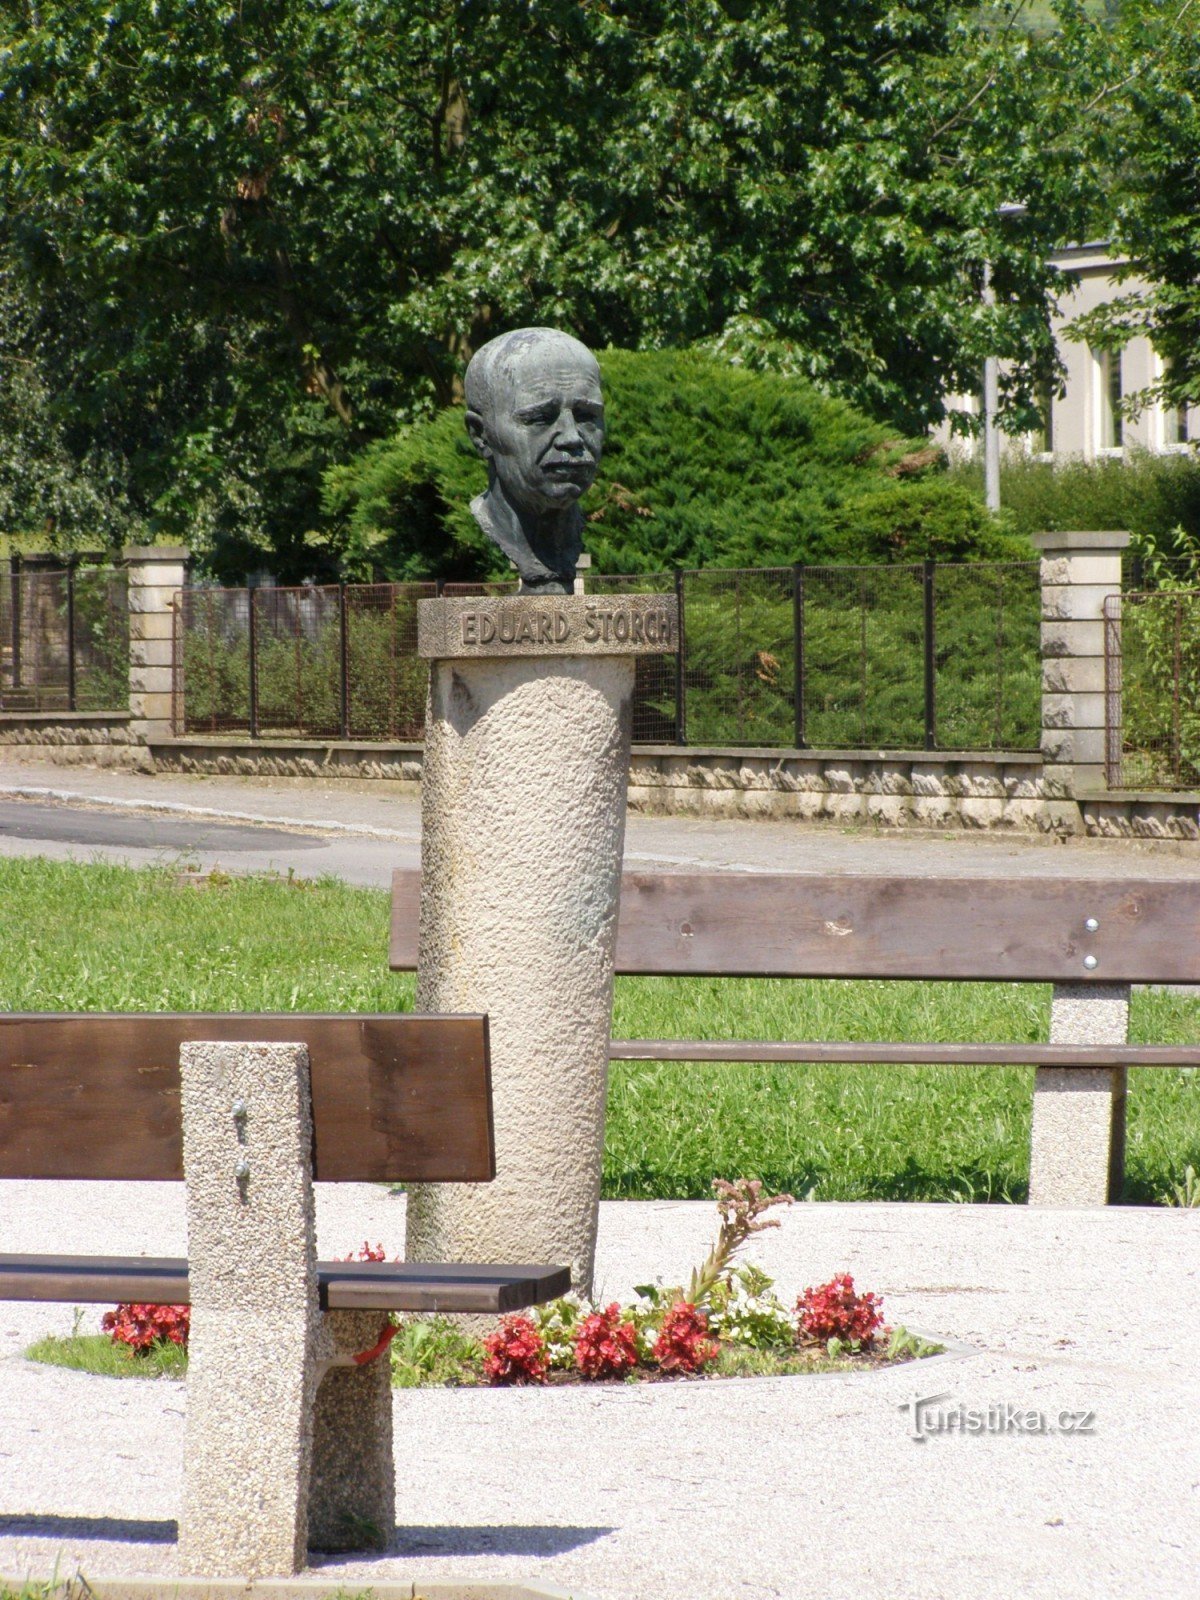 Ostroměř - doprsni kip Eduarda Štorcha